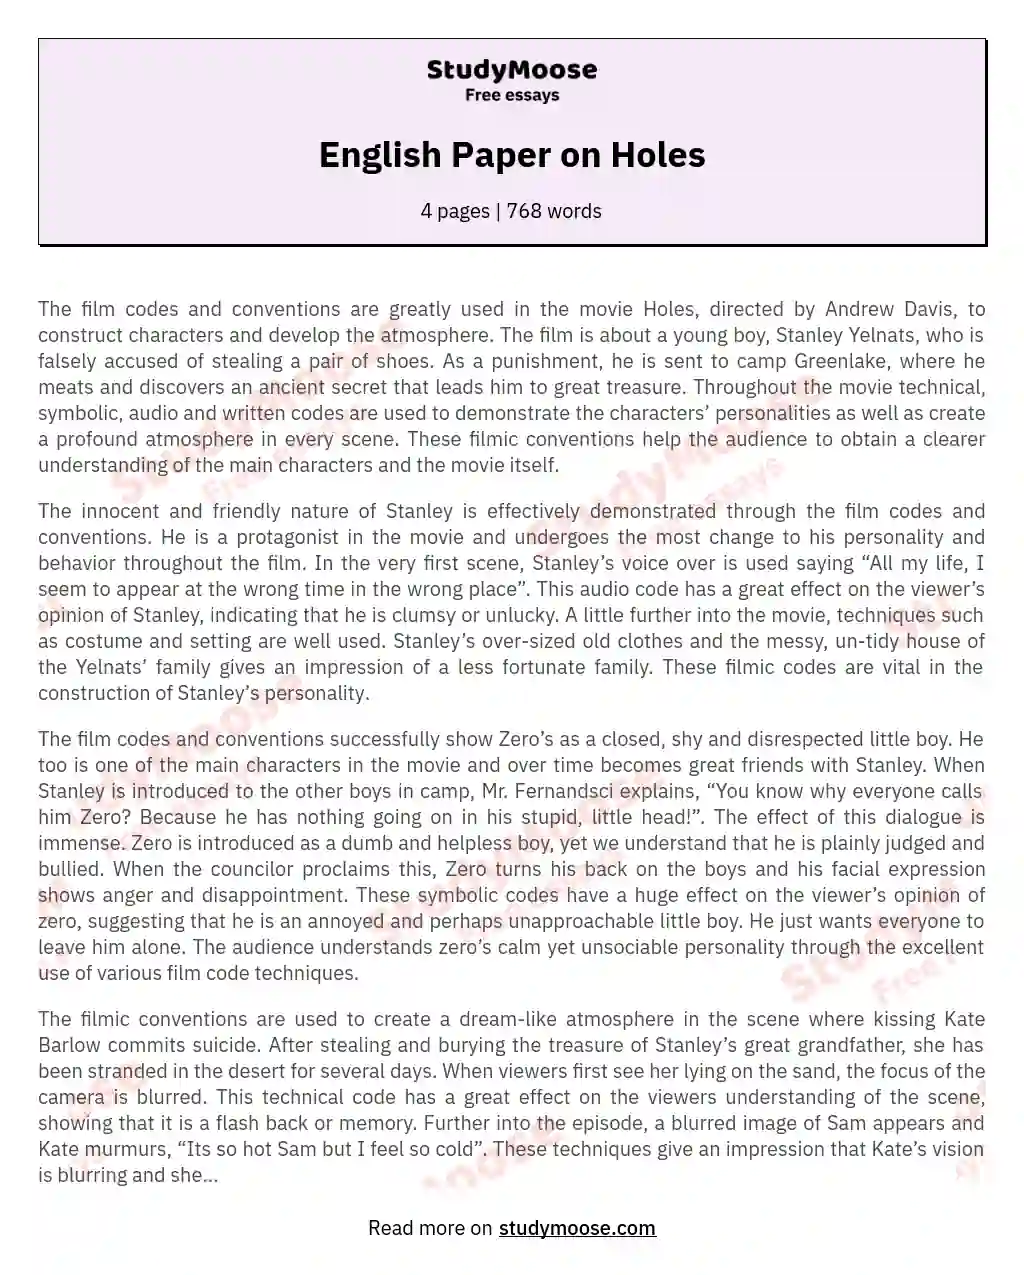 English Paper on Holes essay